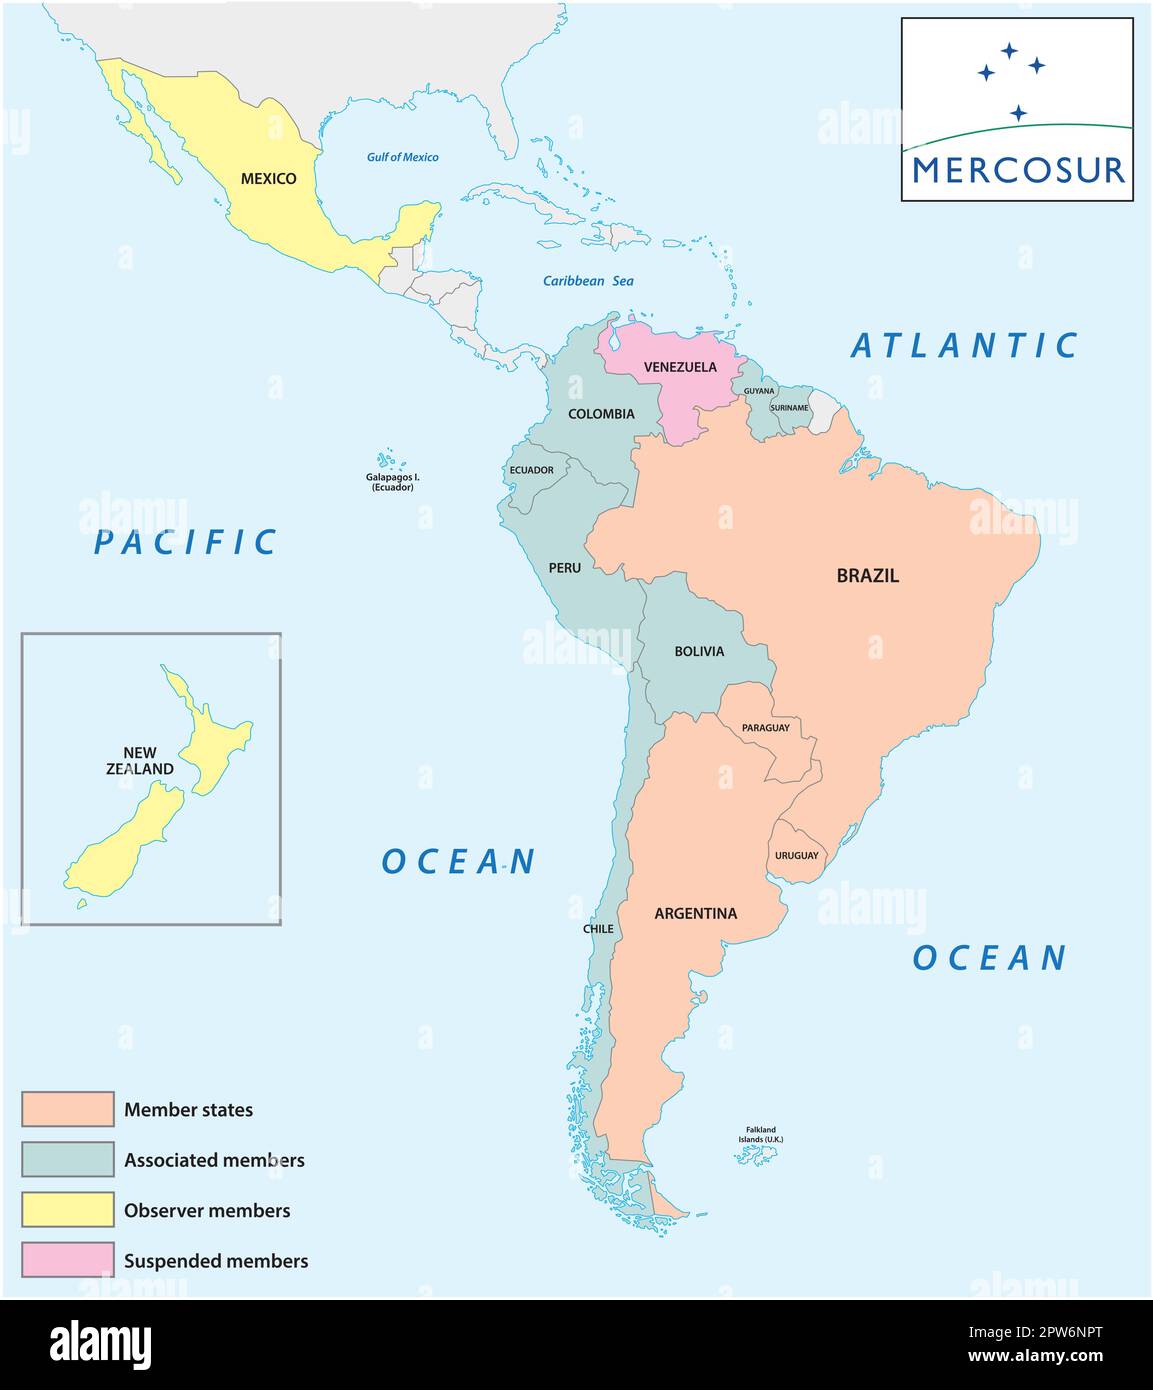 Map of the international economic organization in Latin America Mercosur Stock Vector